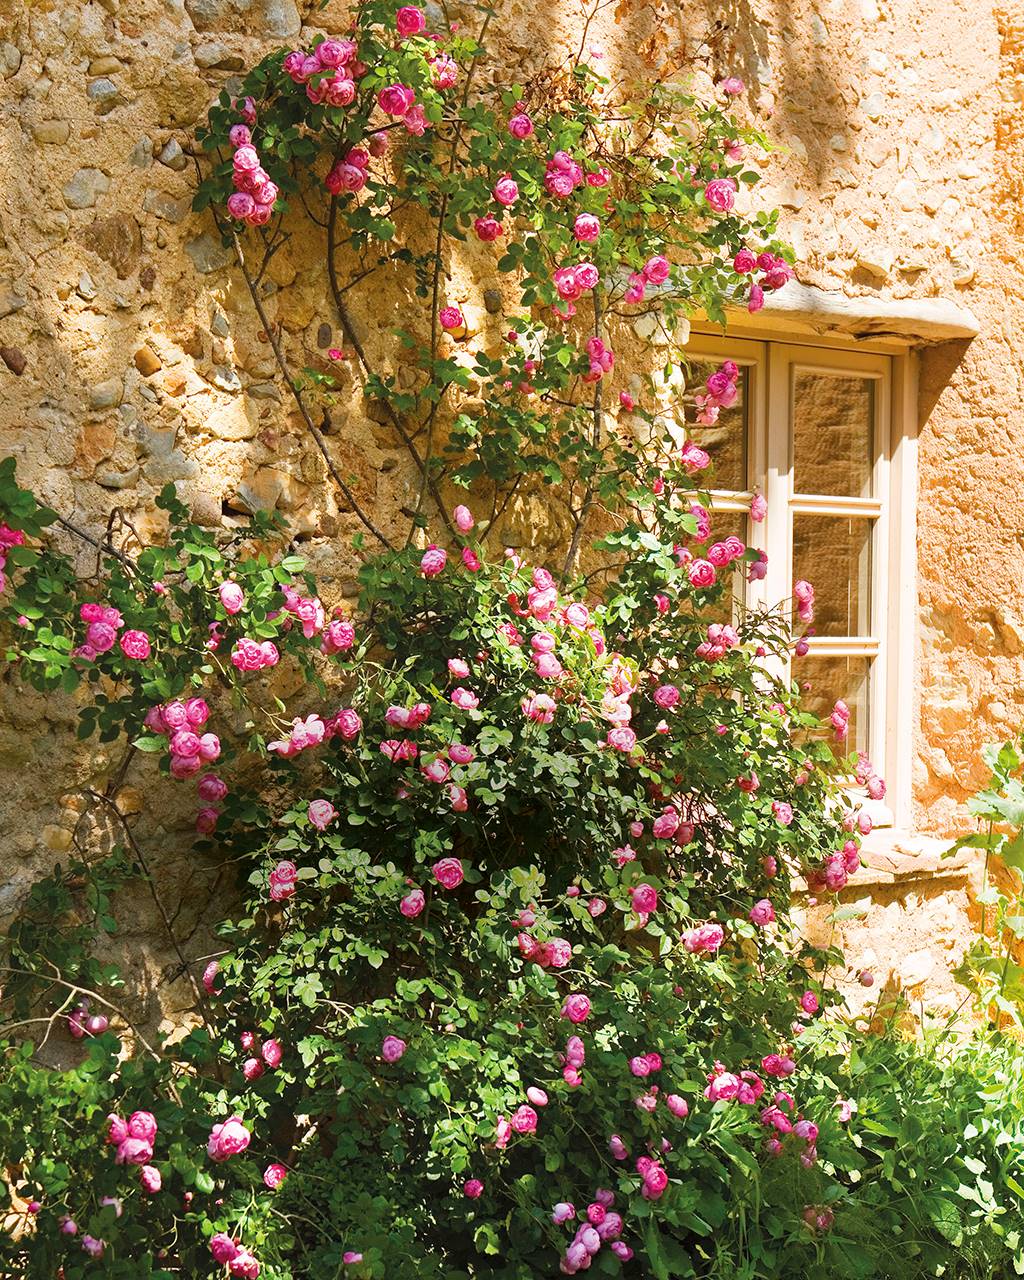 Detalle de rosal trepador en fachada rústica